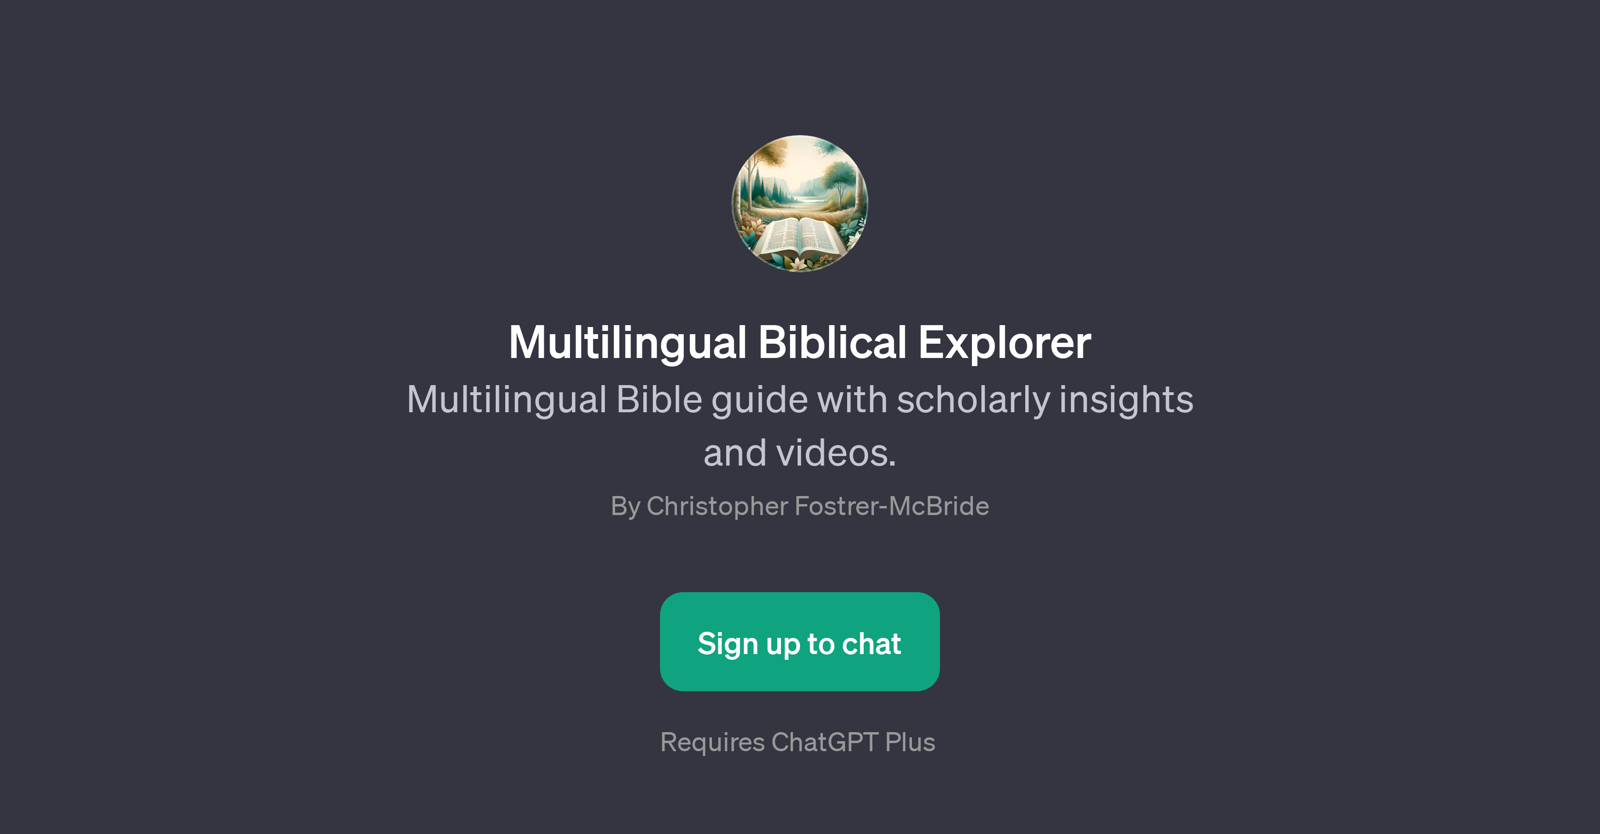 Multilingual Biblical Explorer website